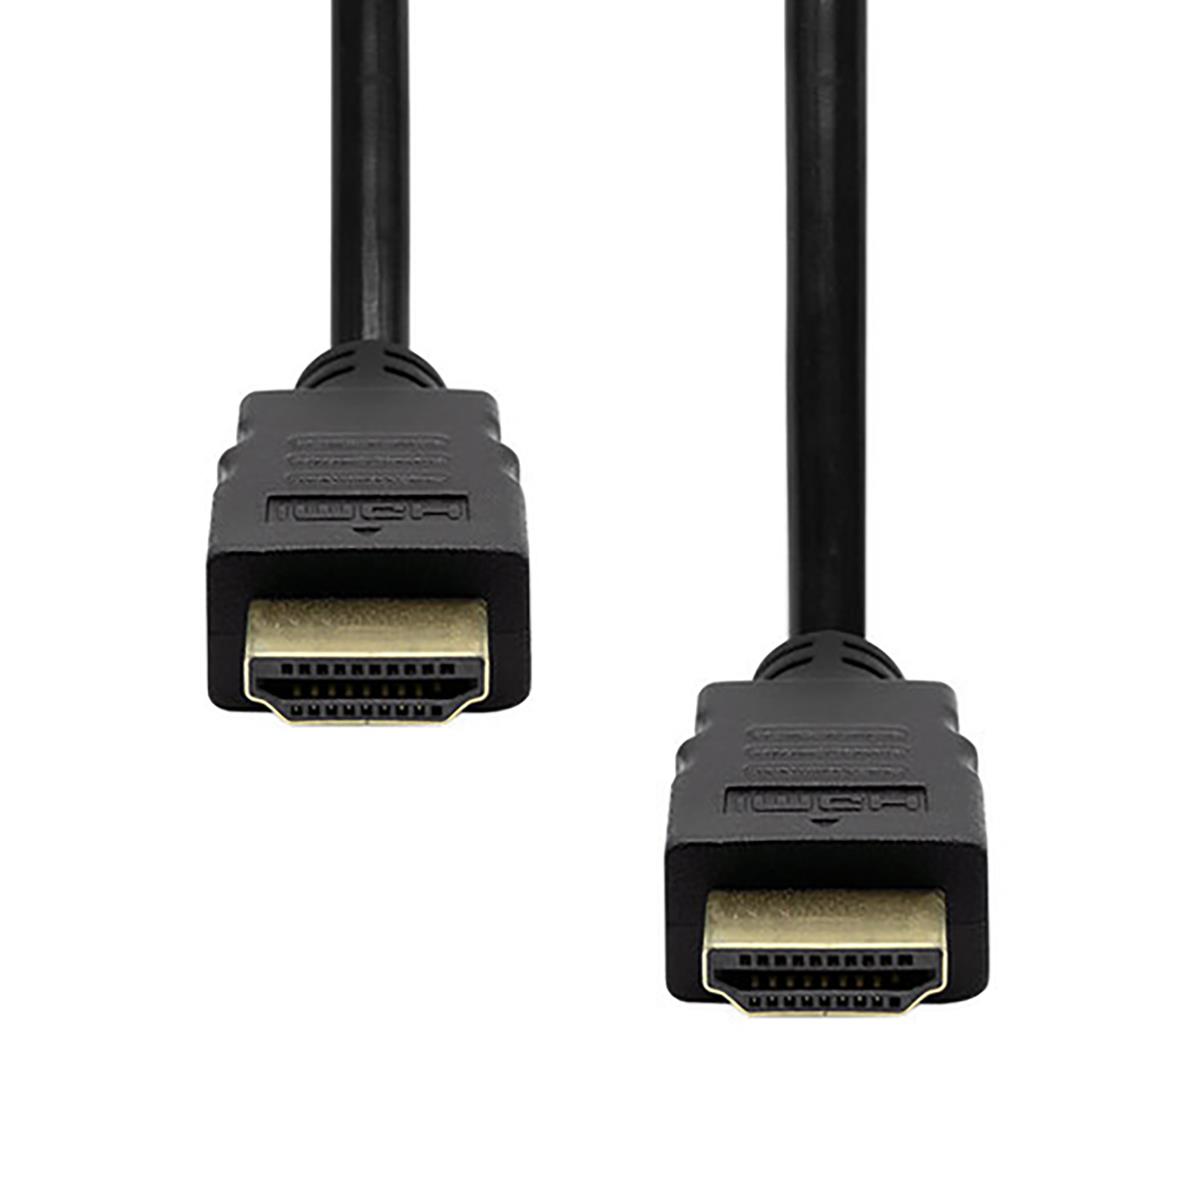 HDMI-kabel, 19-pin ha - ha 1,4 4k i 30Hz1 m 36070163_2